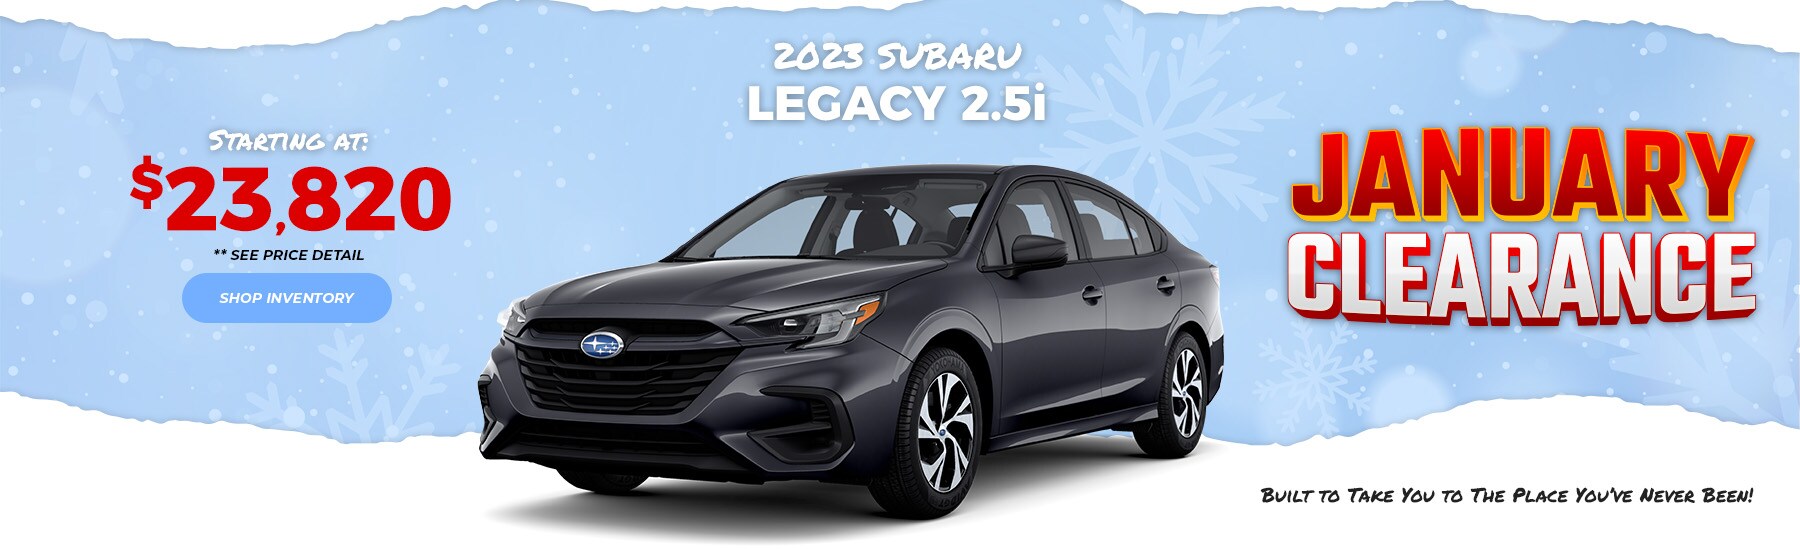 2023 Subaru Legacy 2.5i